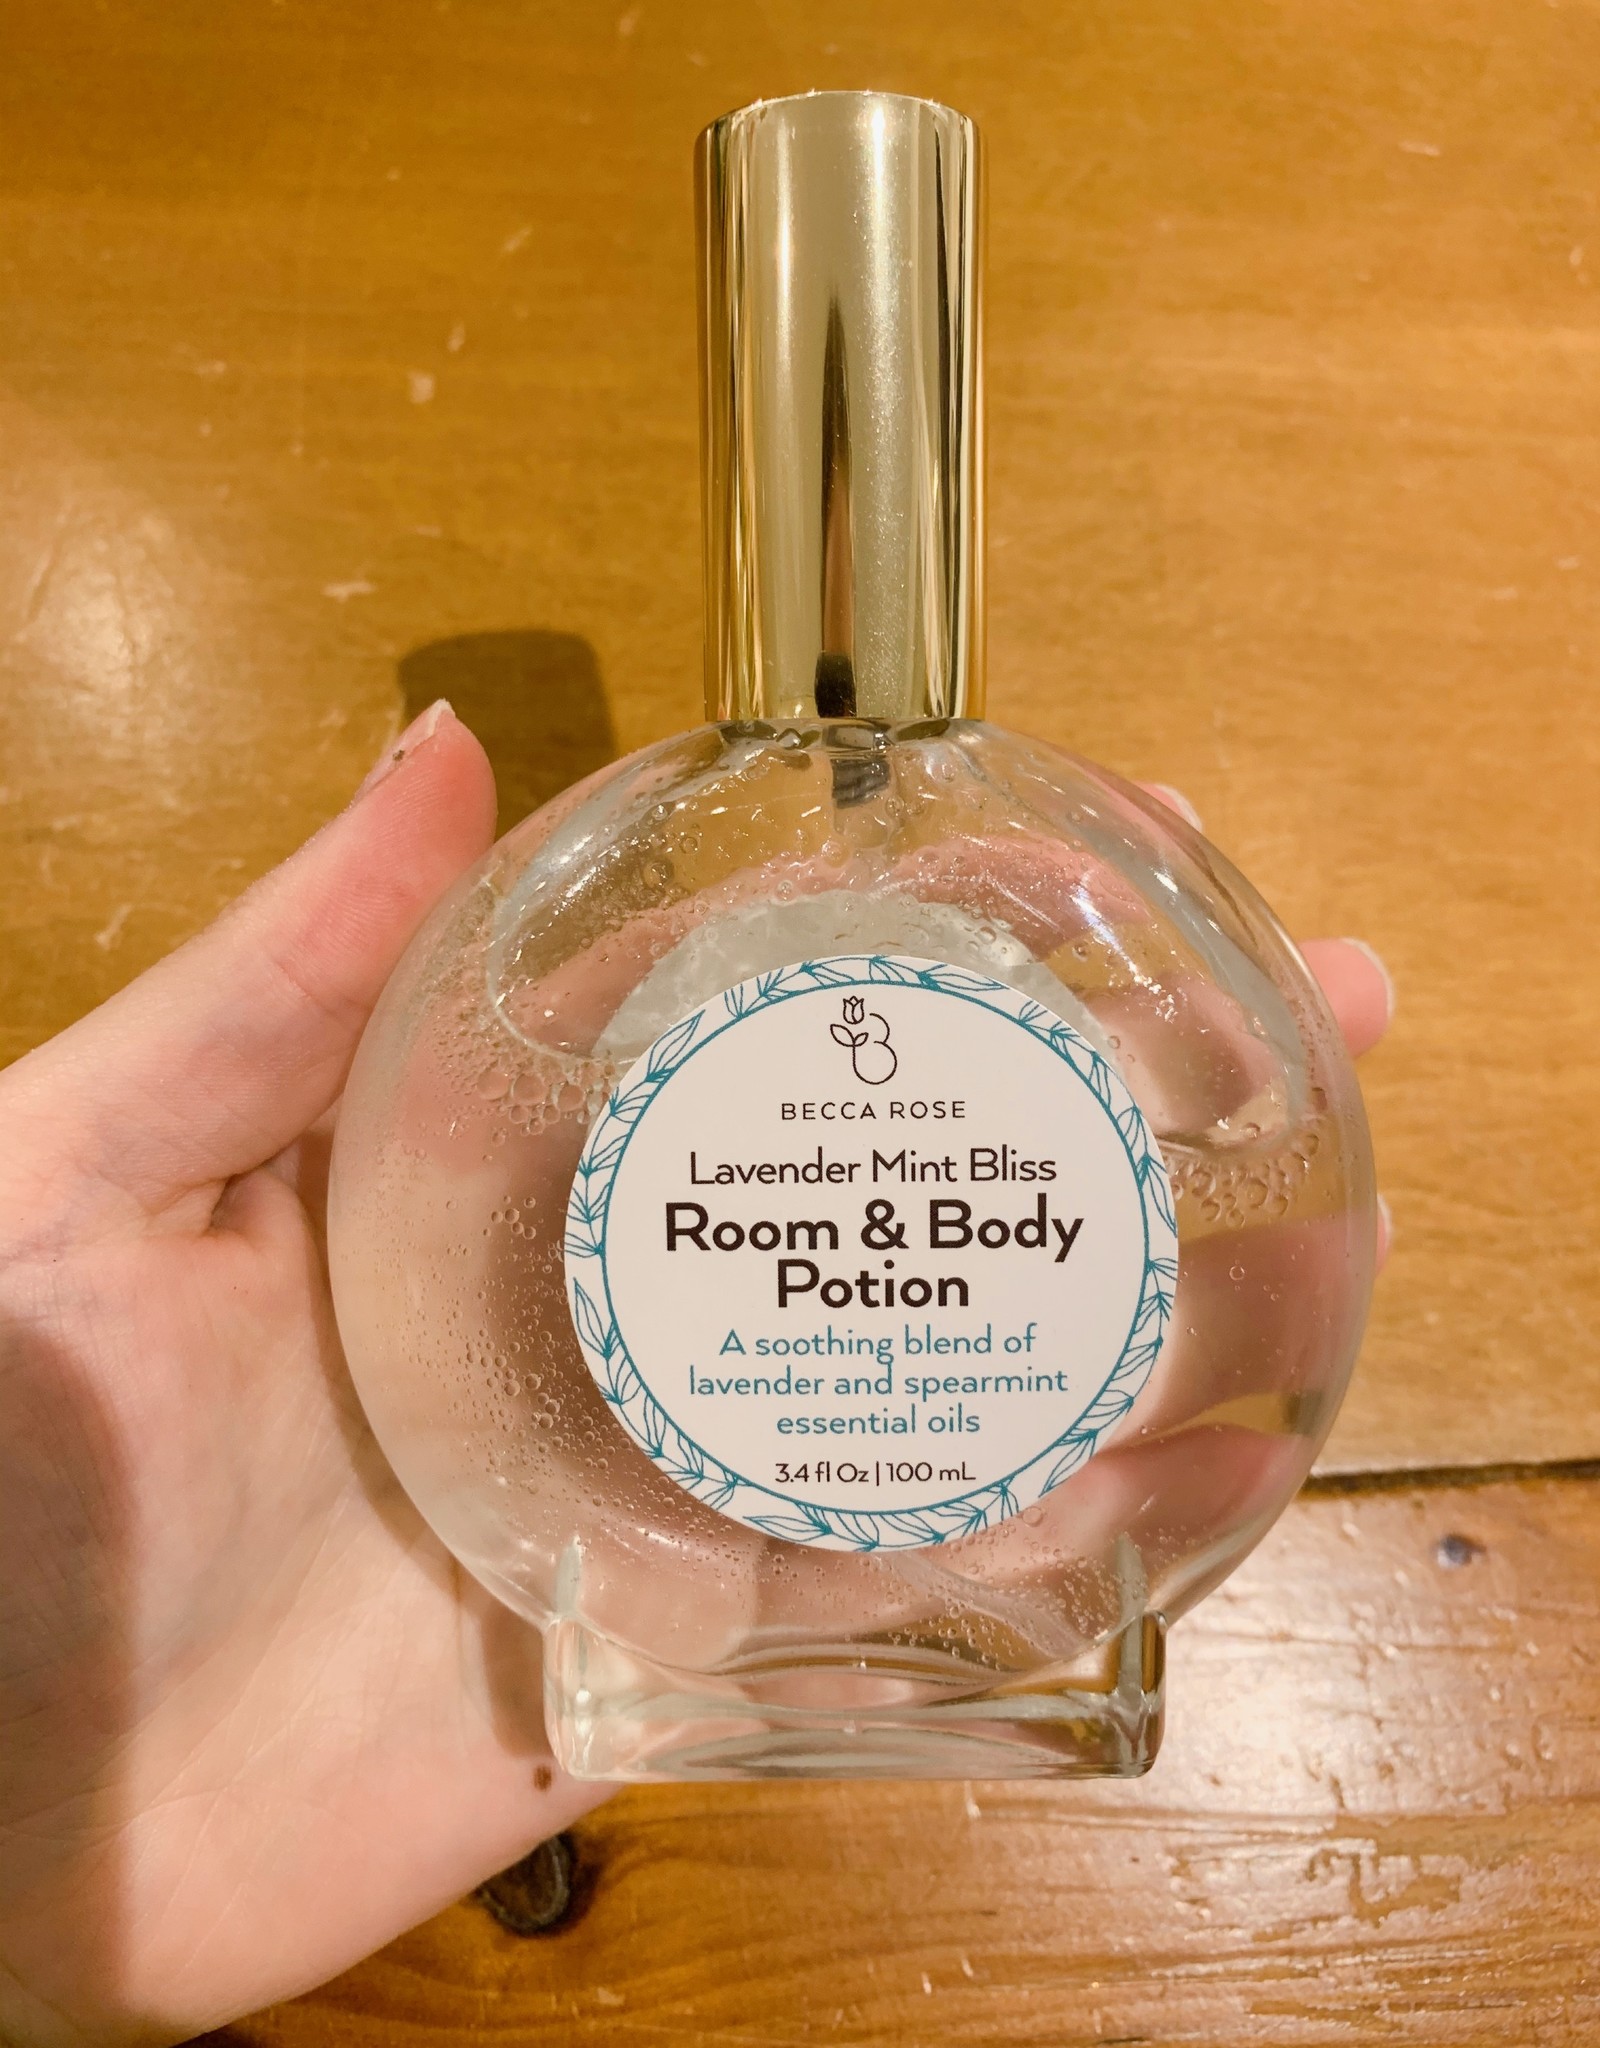 Becca Rose Room & Body Potion: Lavender Mint Bliss